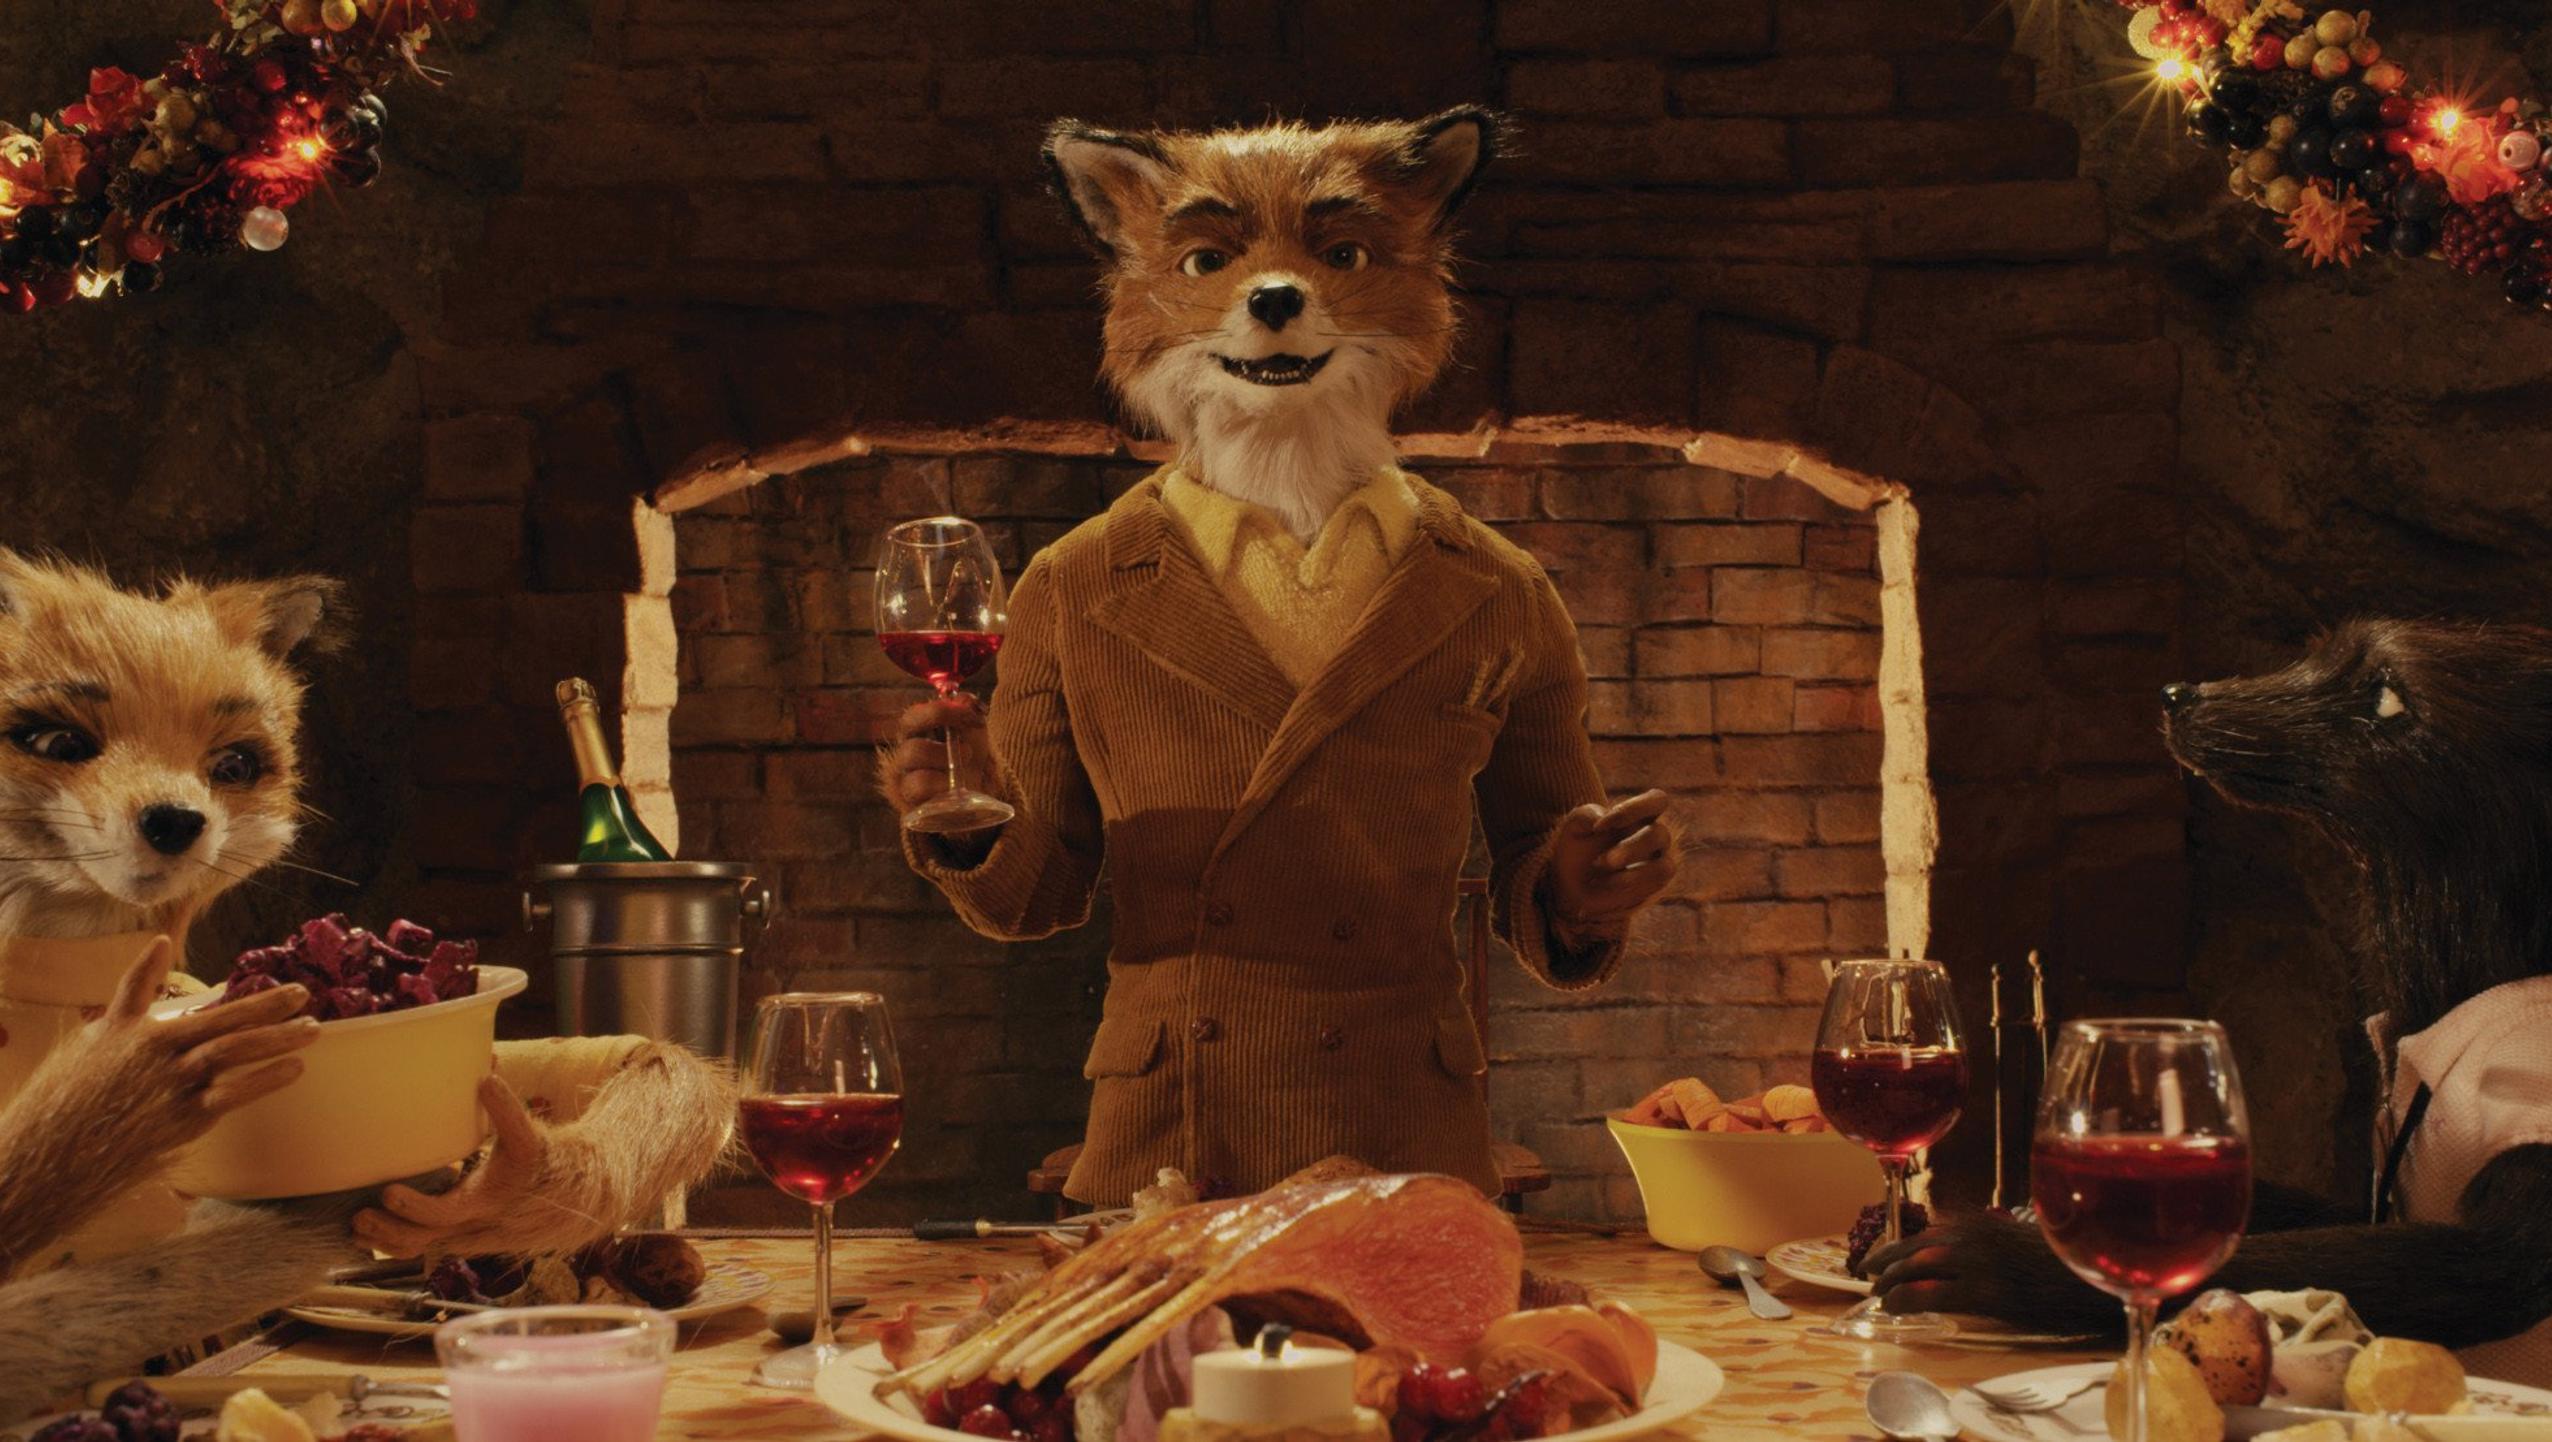 Mister fox. Бесподобный Мистер Фокс. Бесподобный Мистер Фокс (fantastic Mr. Fox), 2009. Уэс Андерсон великолепный Мистер Фокс. Бесподобный Мистер фикс.